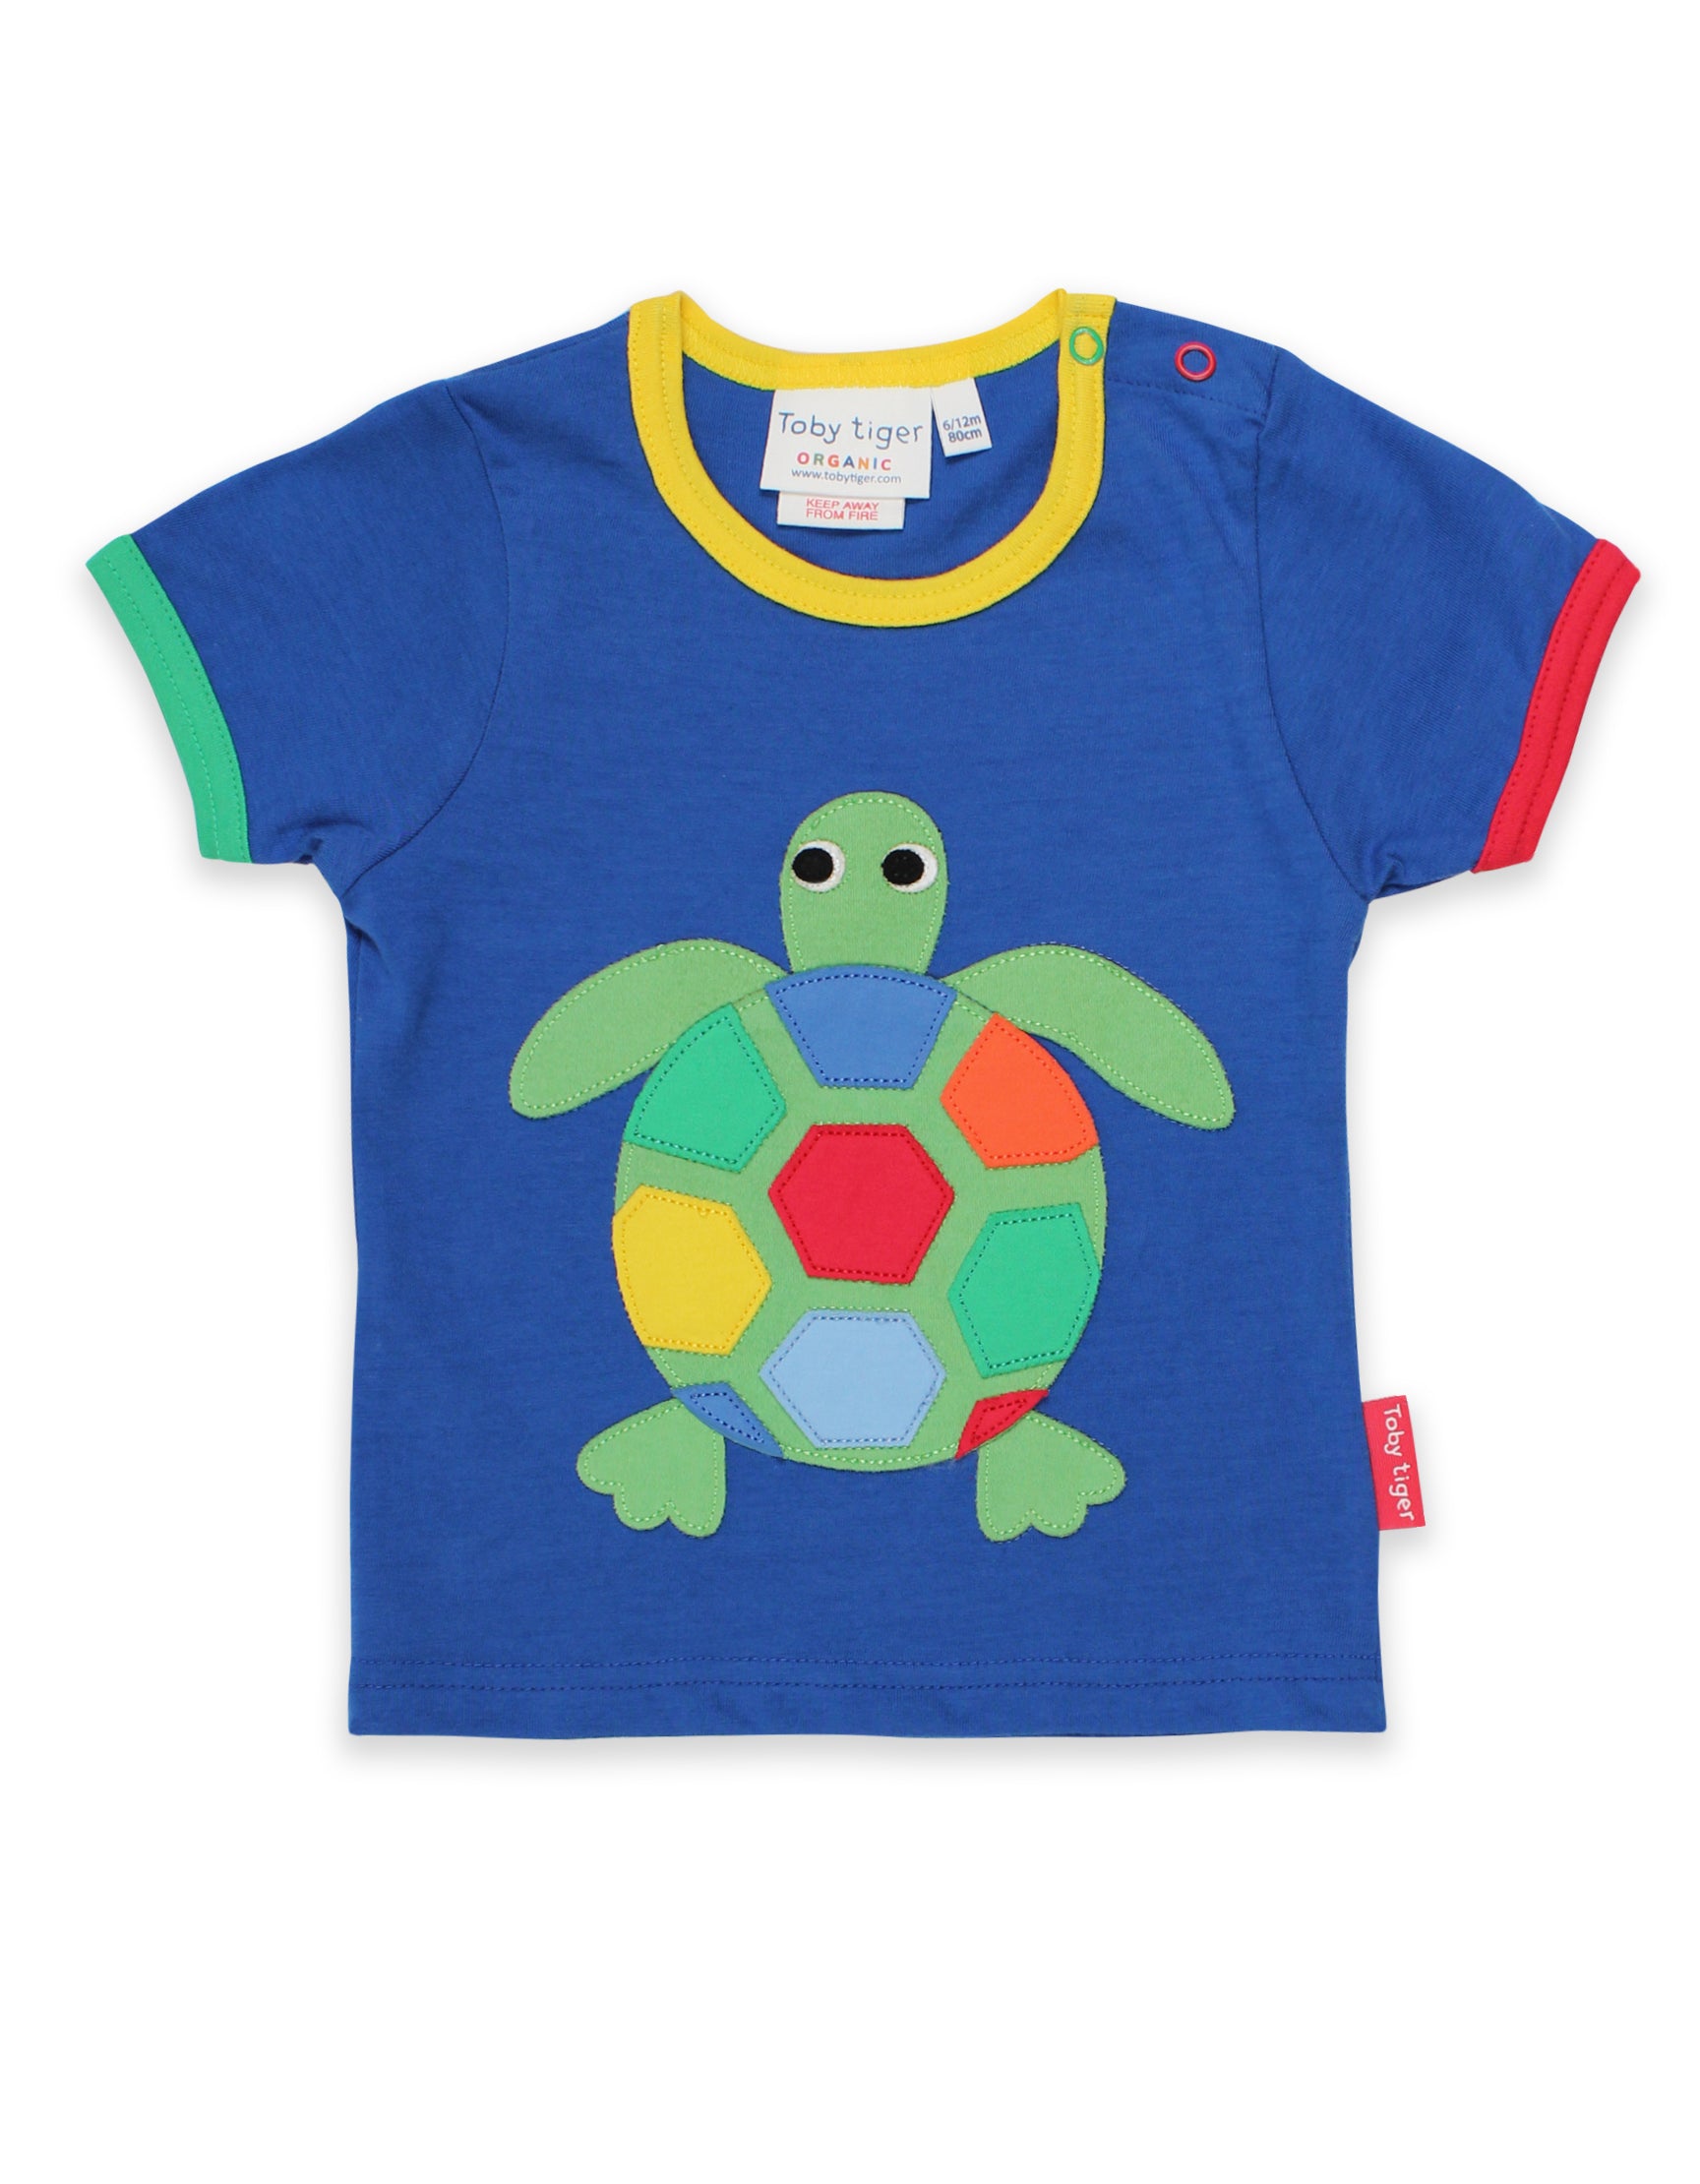 Toby Tiger Organic Short Sleeve T-Shirt - Turtle Applique